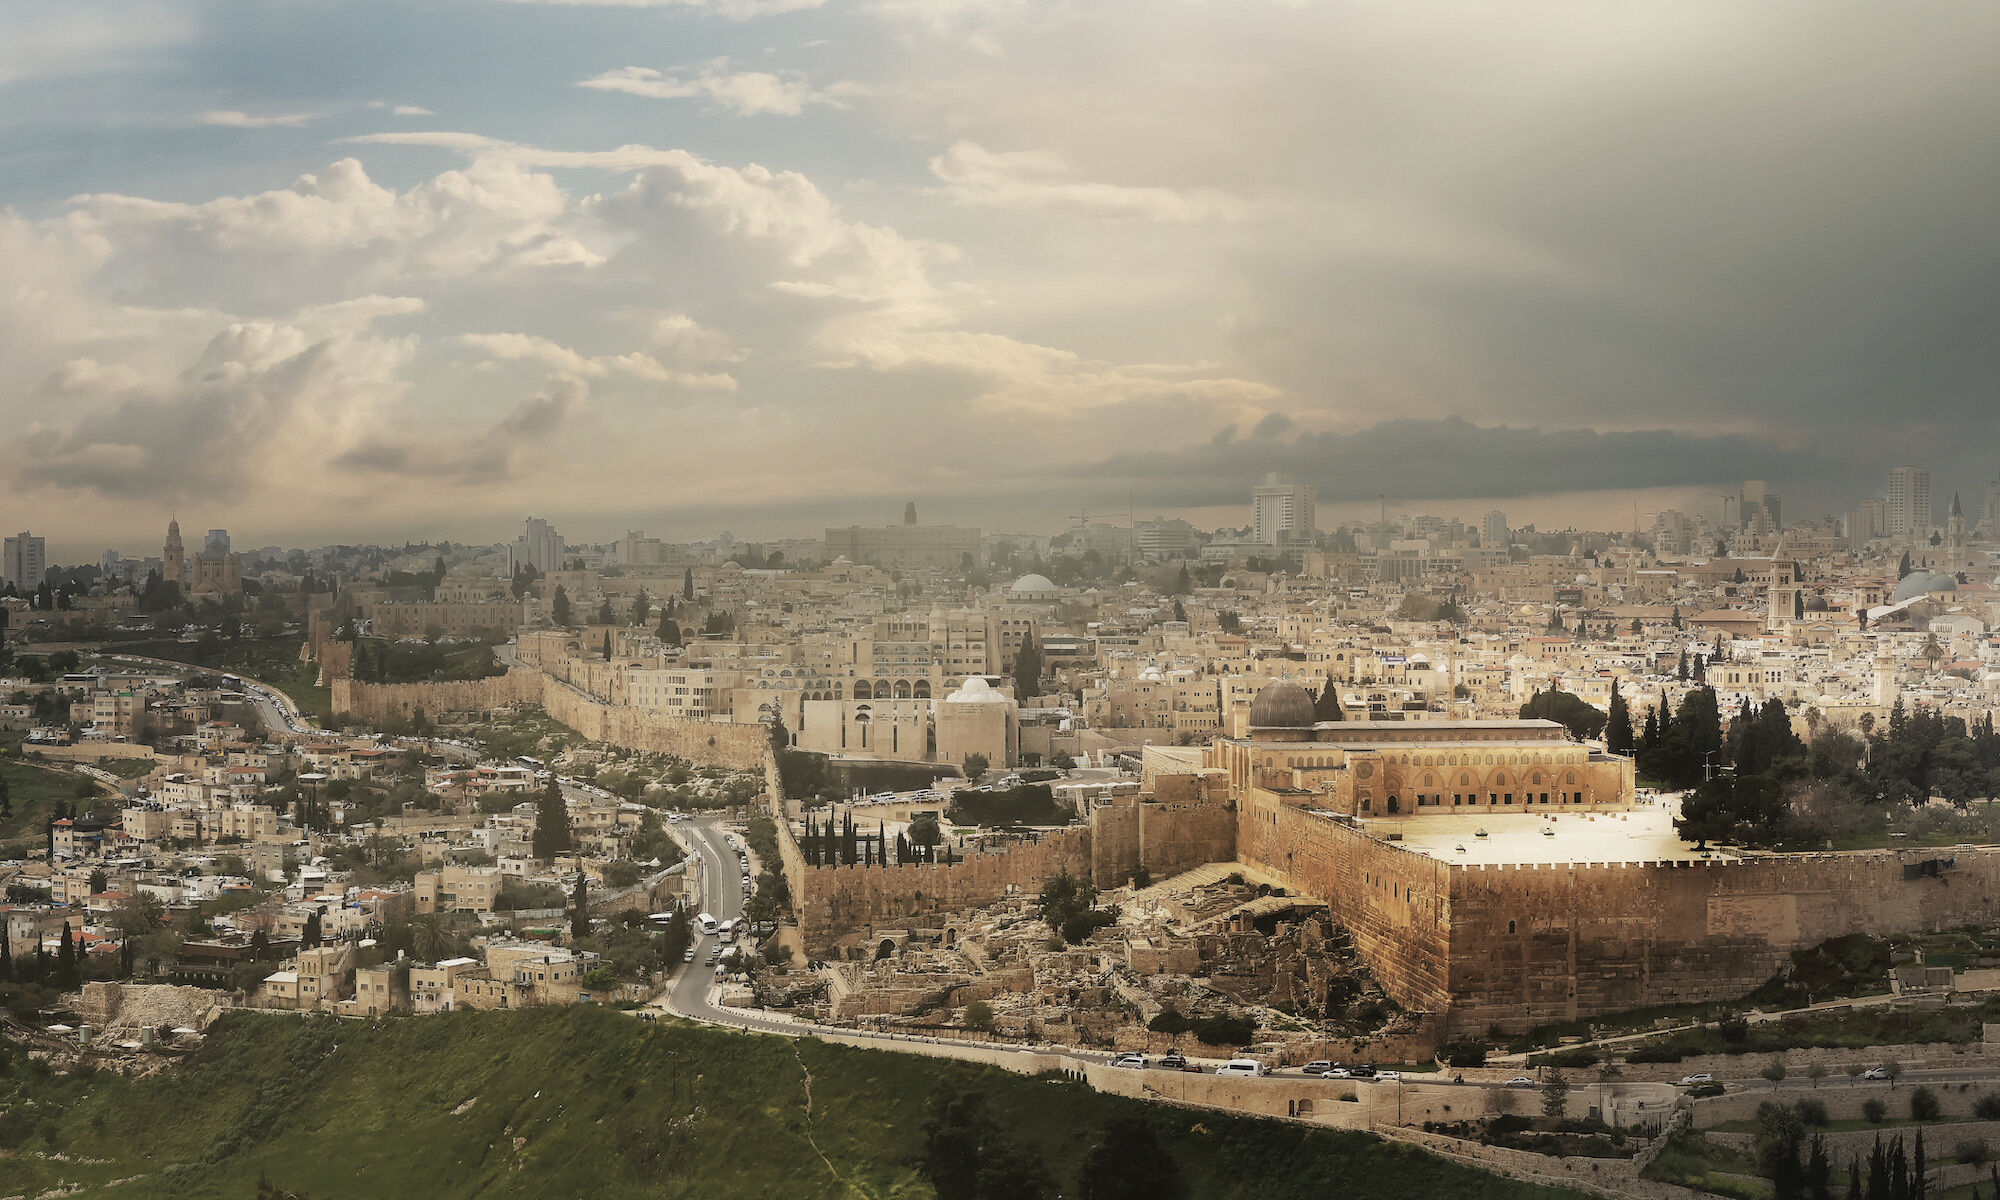 ¡Descubriendo la antigua Jerusalén!